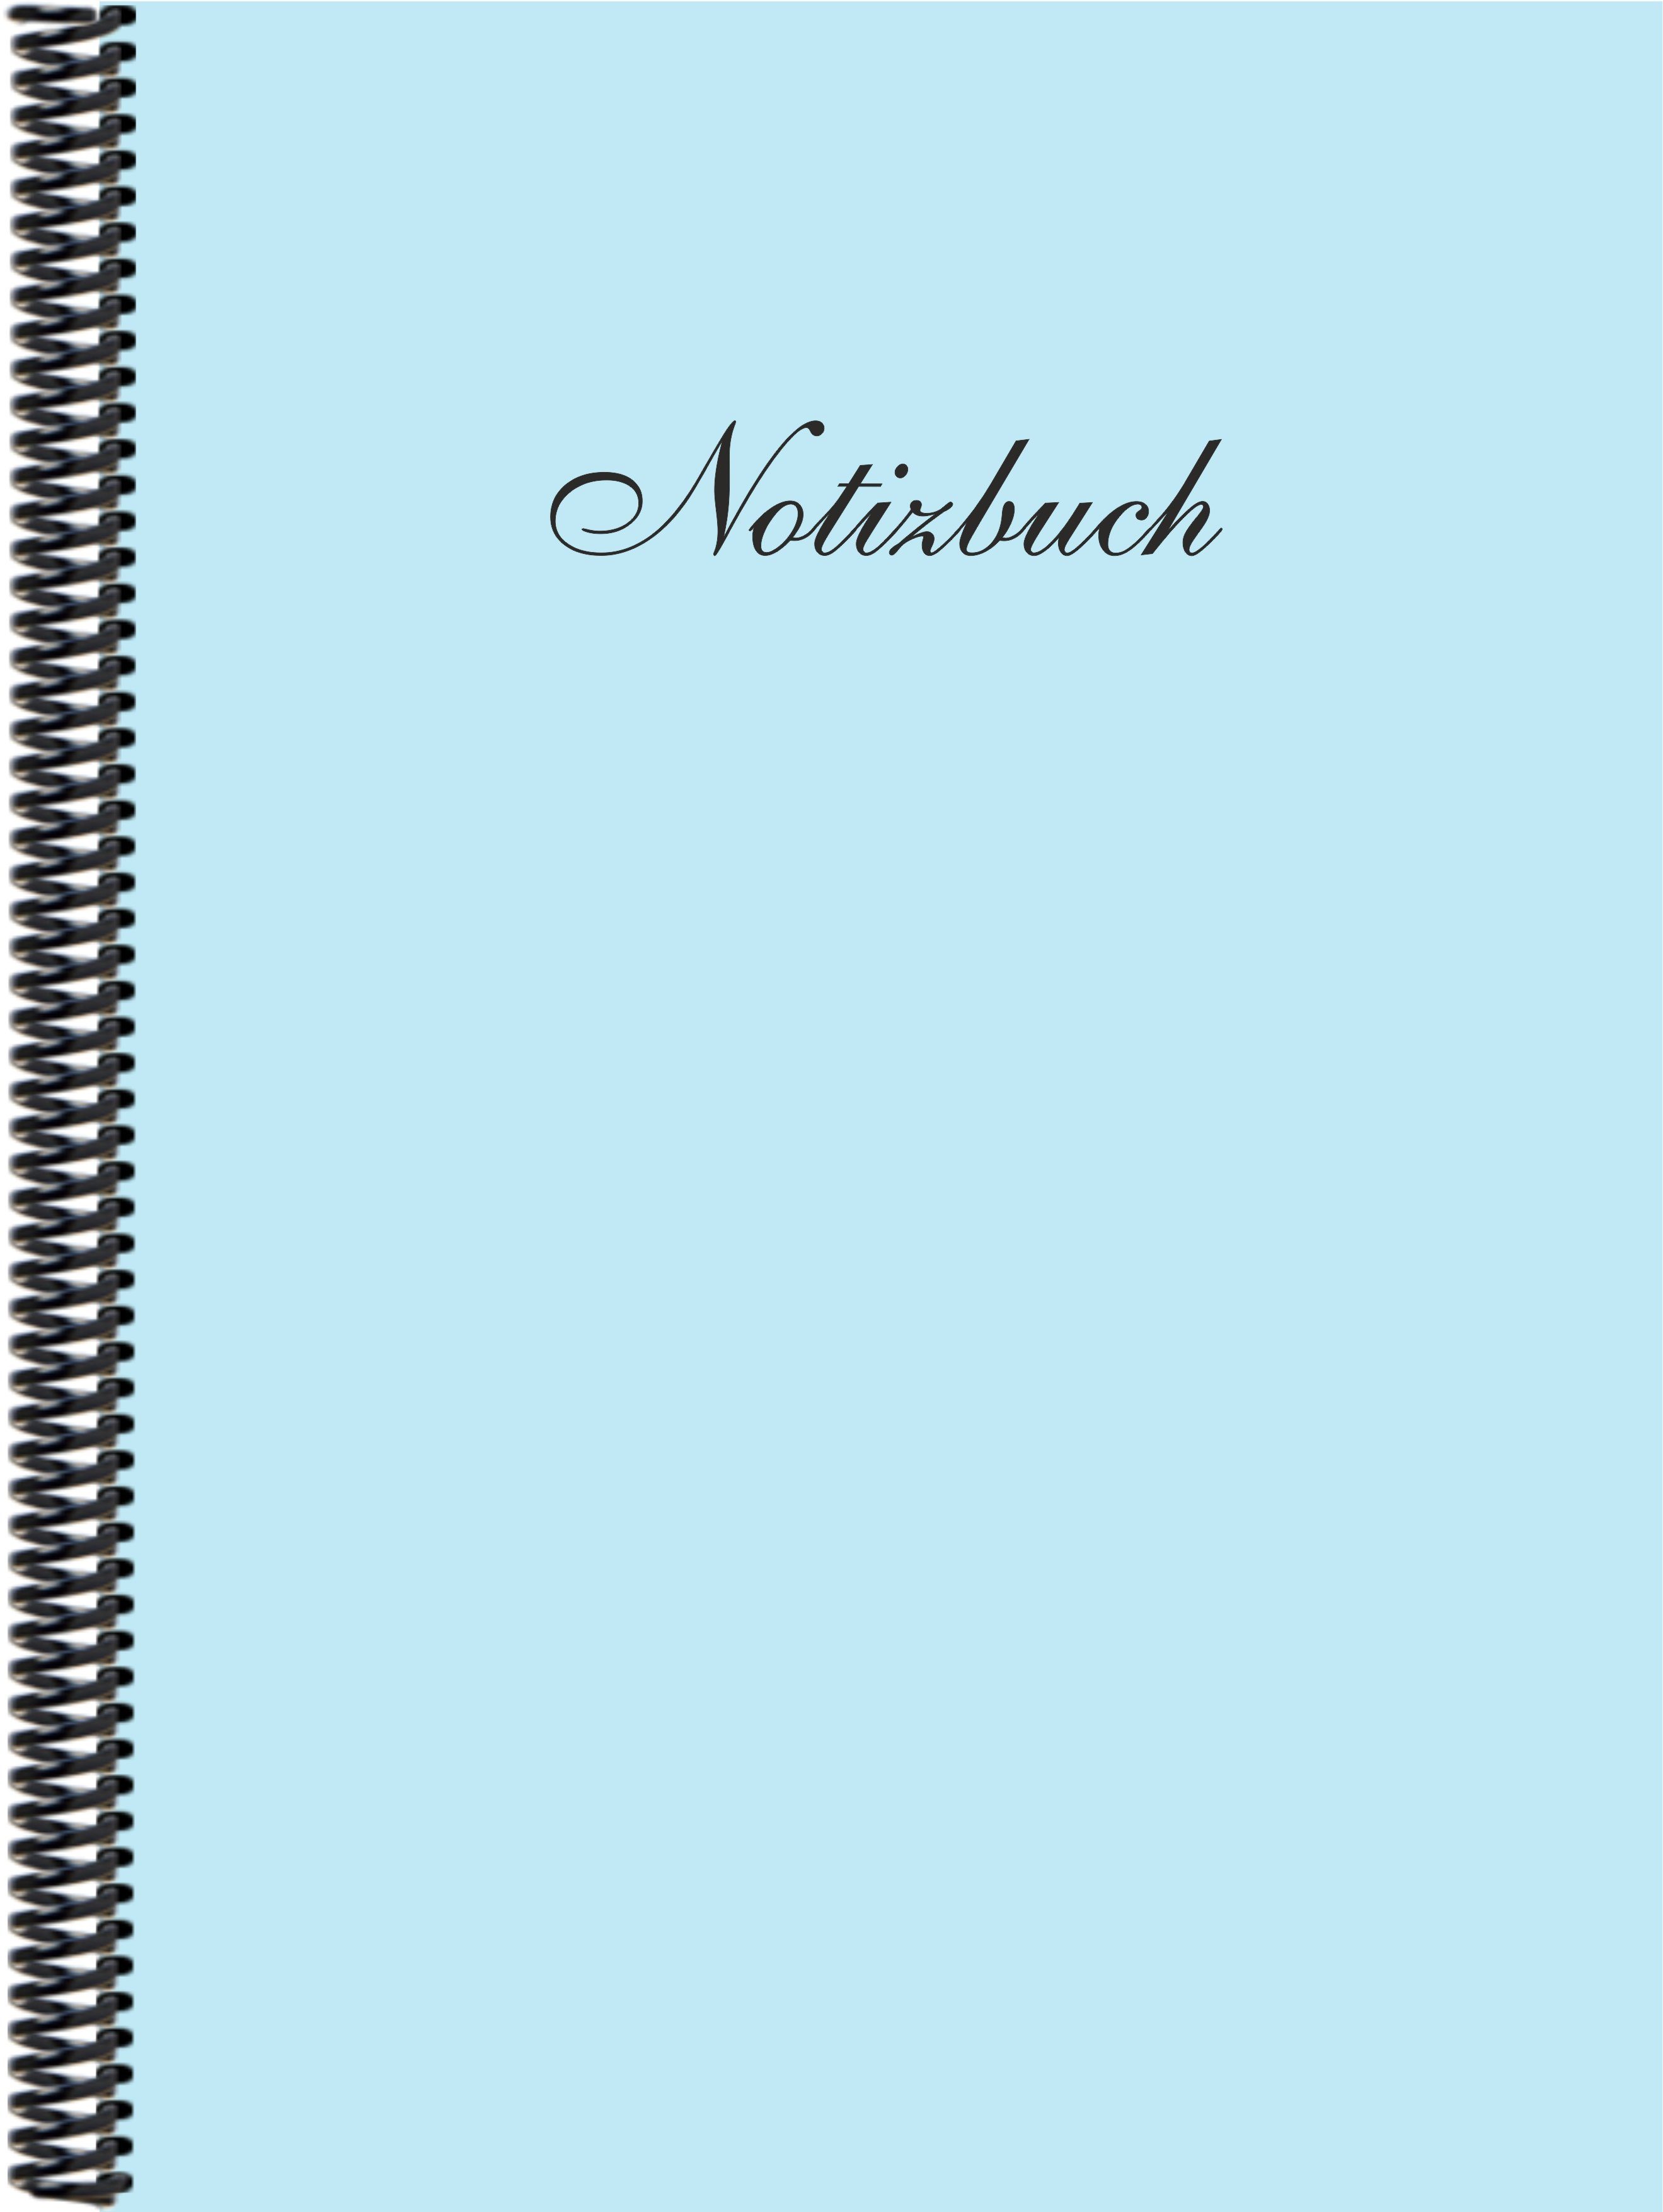 Gmbh Notizbuch blanko, DINA4 in Verlag Trendfarbe Notizbuch eisblau der E&Z